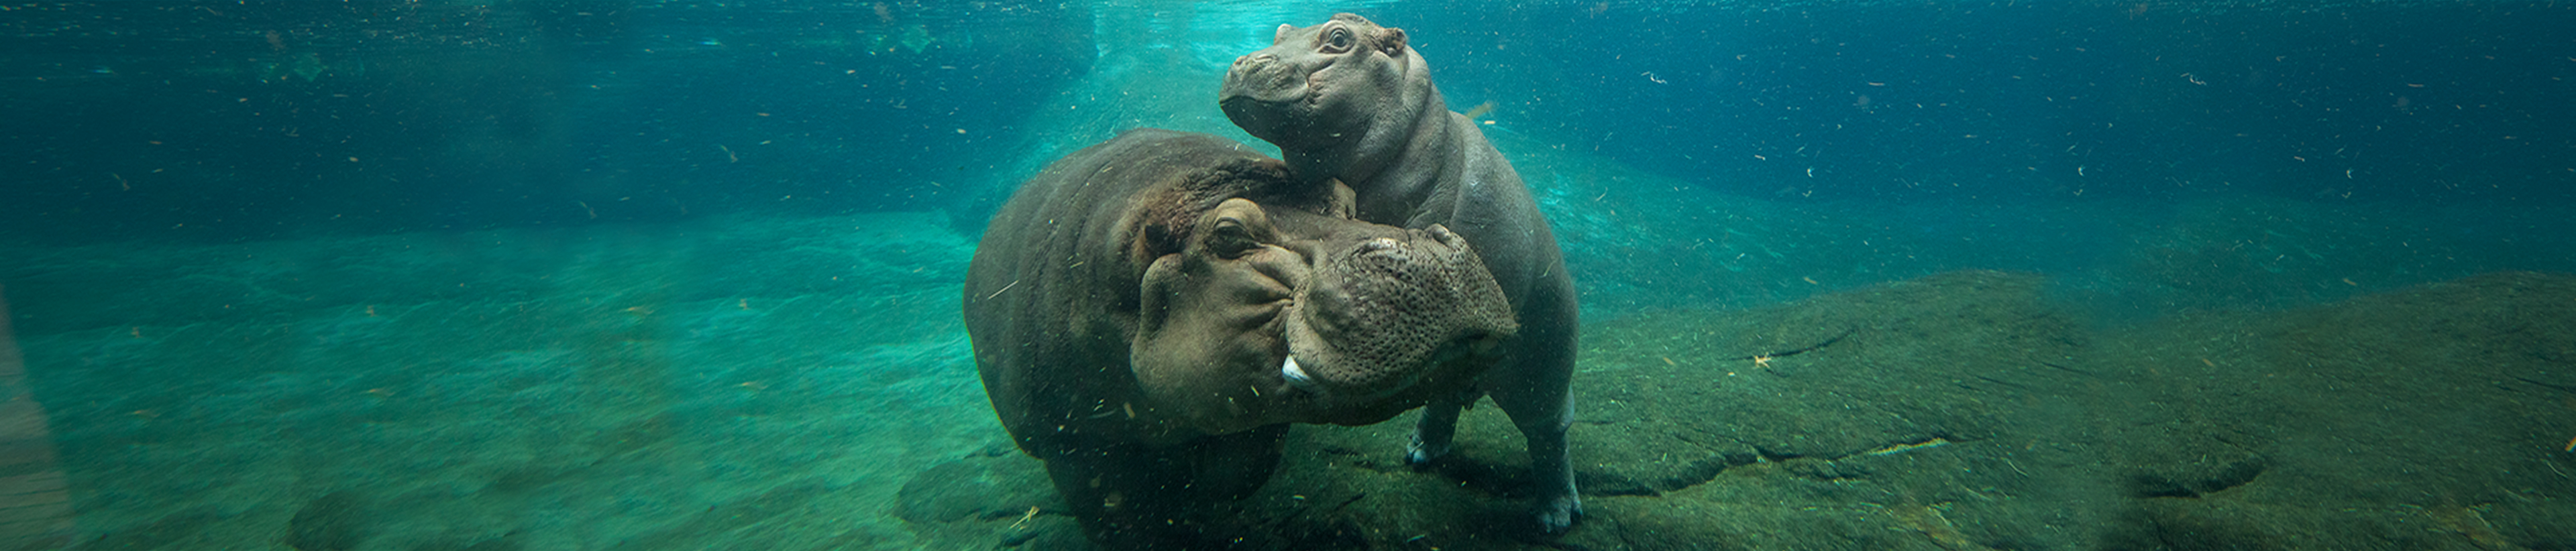 hippo-san-diego-zoo-animals-plants